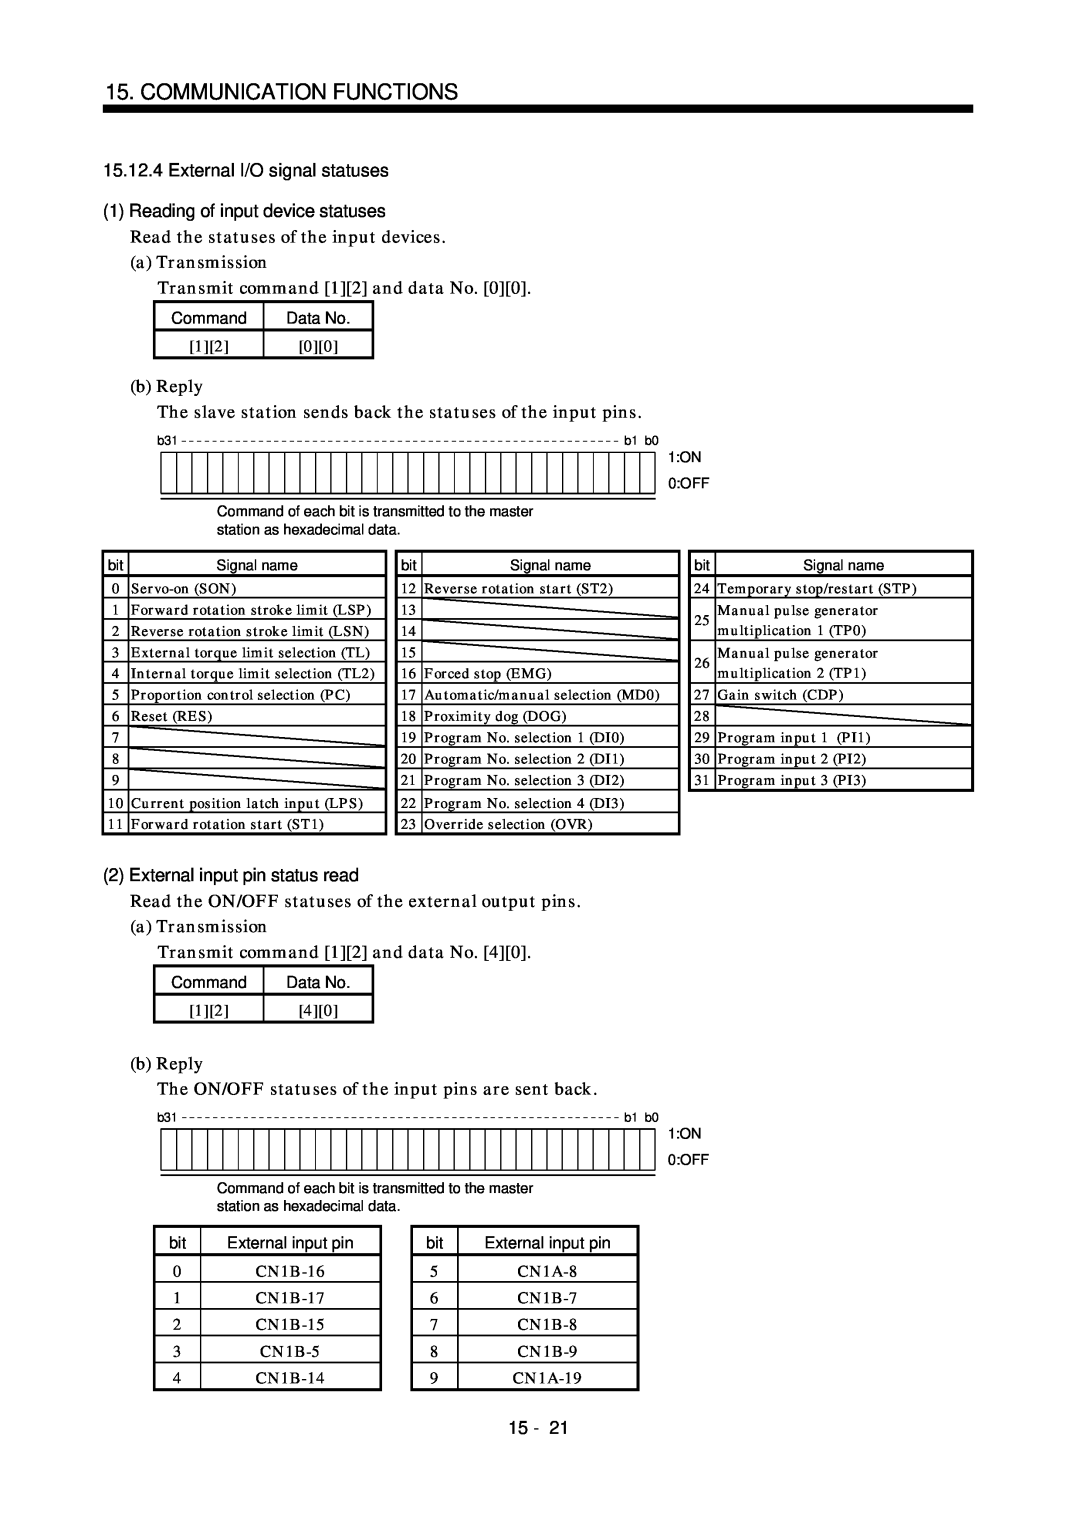 Mitsubishi Electronics MR-J2S- CL External I/O signal statuses, 1Reading of input device statuses, Communication Functions 